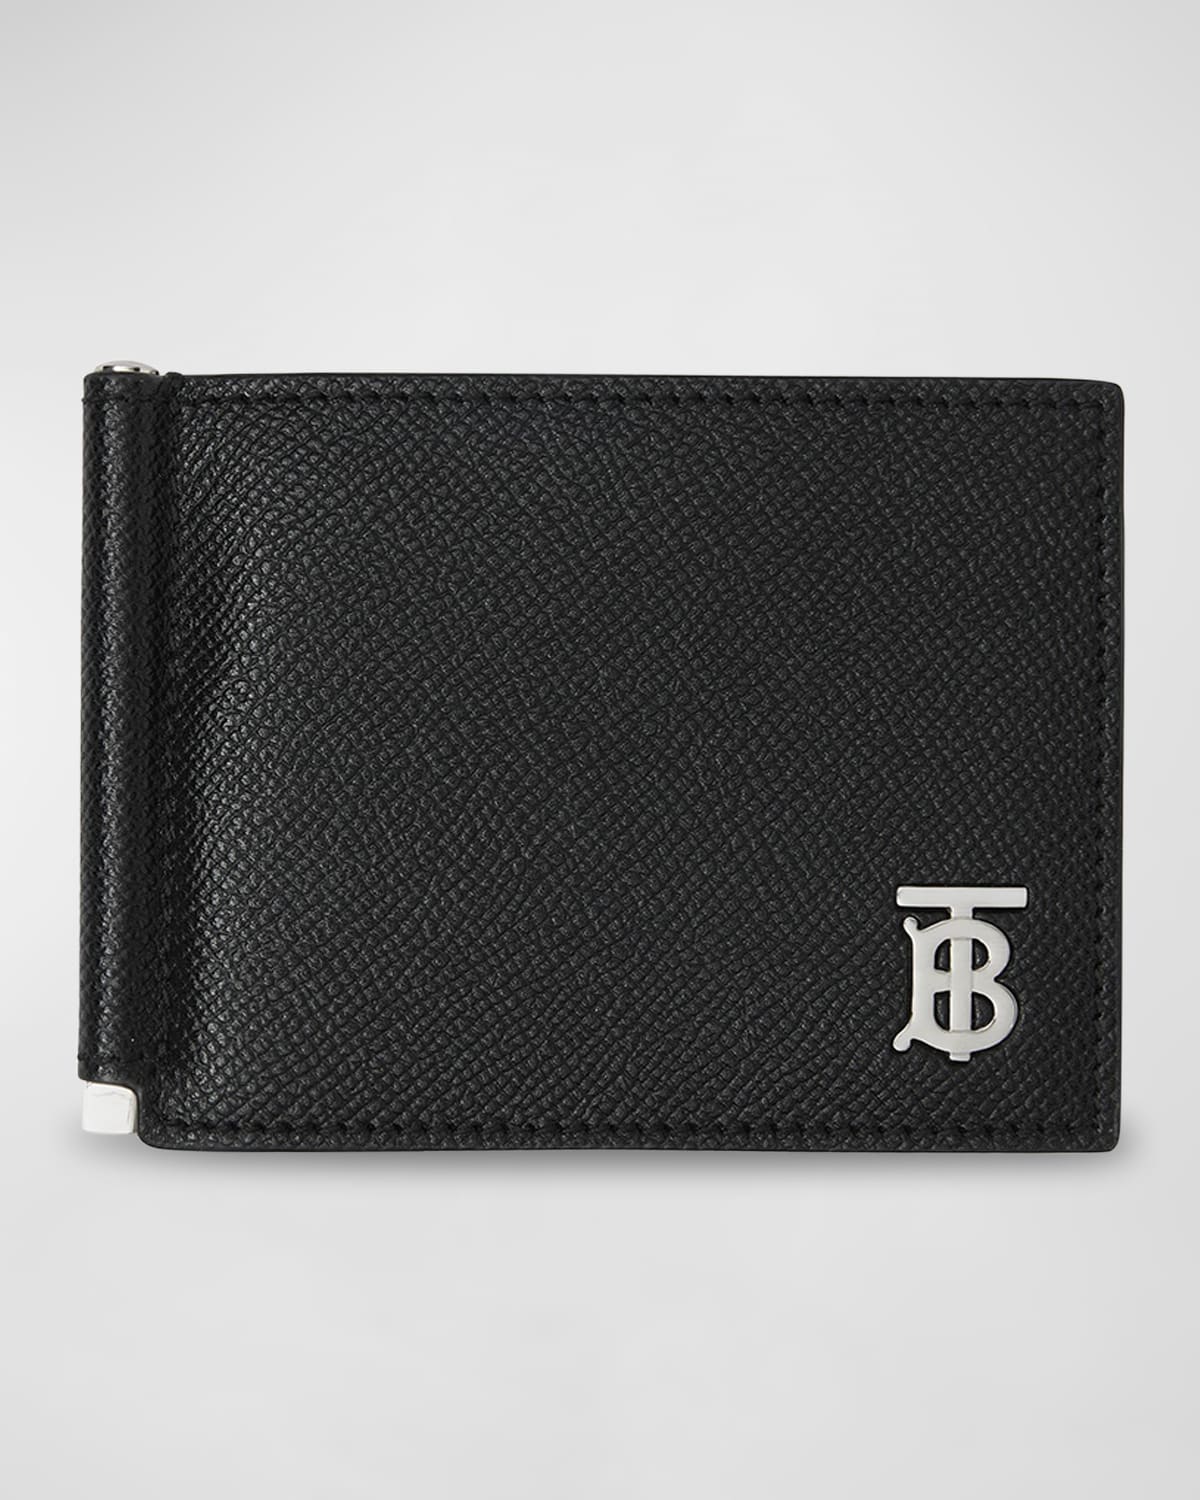 Burberry Men's Vintage Check Money Clip Wallet | Neiman Marcus